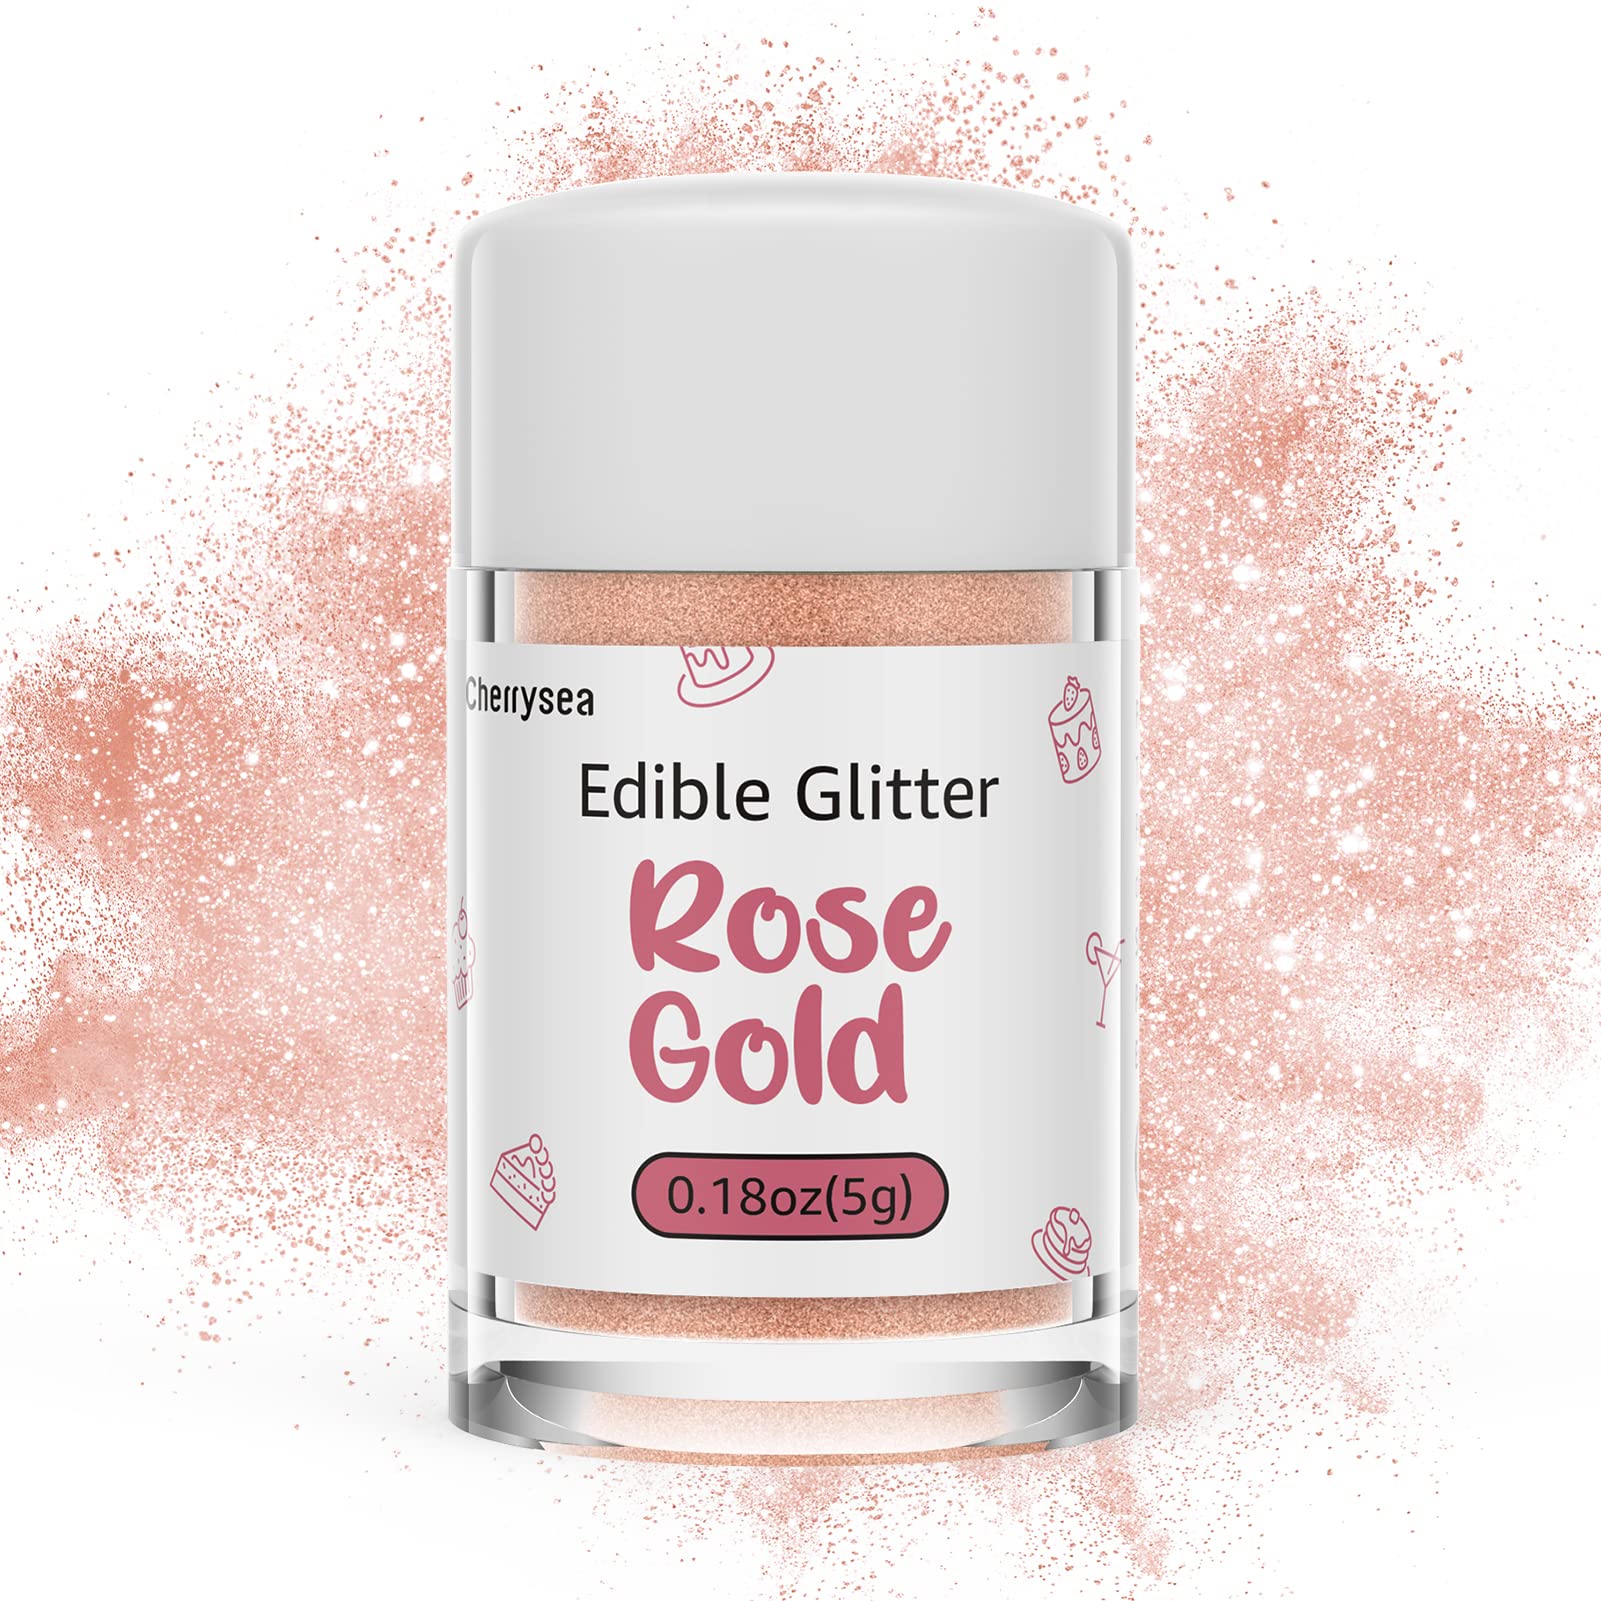 Red Edible Glitter - 1 Ounce